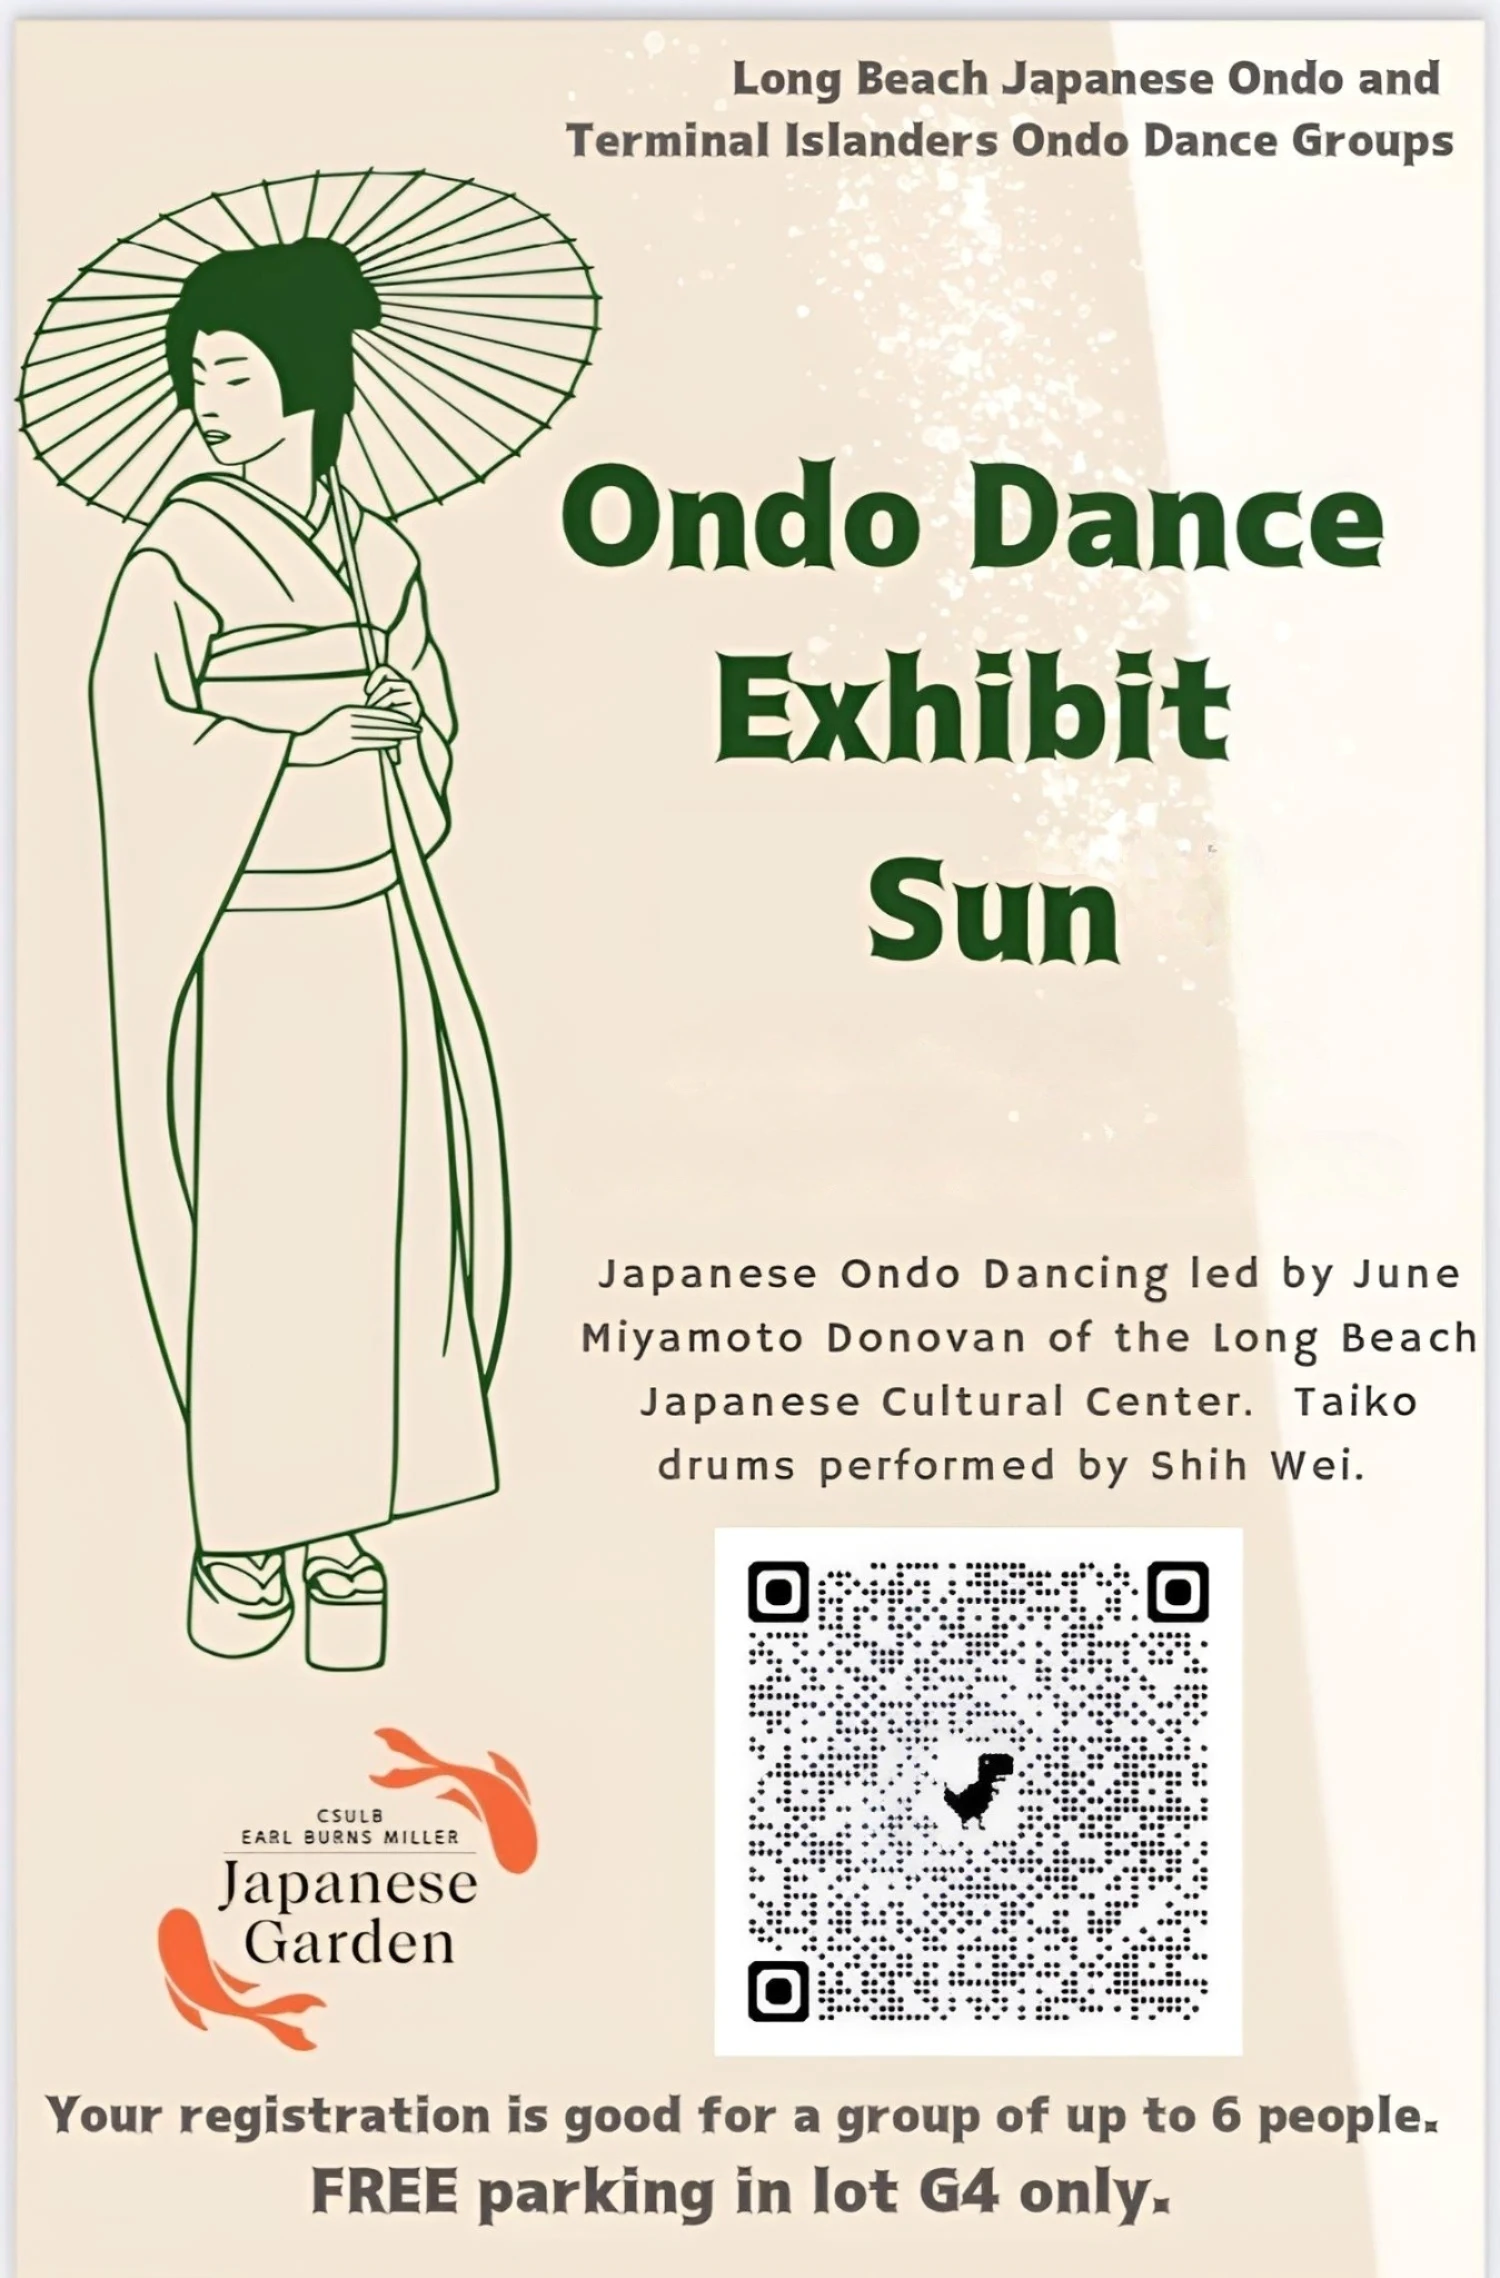 2023 Long Beach Ondo Dance Exhibit (Dancing Starts: 11am, 11:45 am, 12:30 pm) Japanese Ondo Dancing Led by June Miyamoto Donovan 